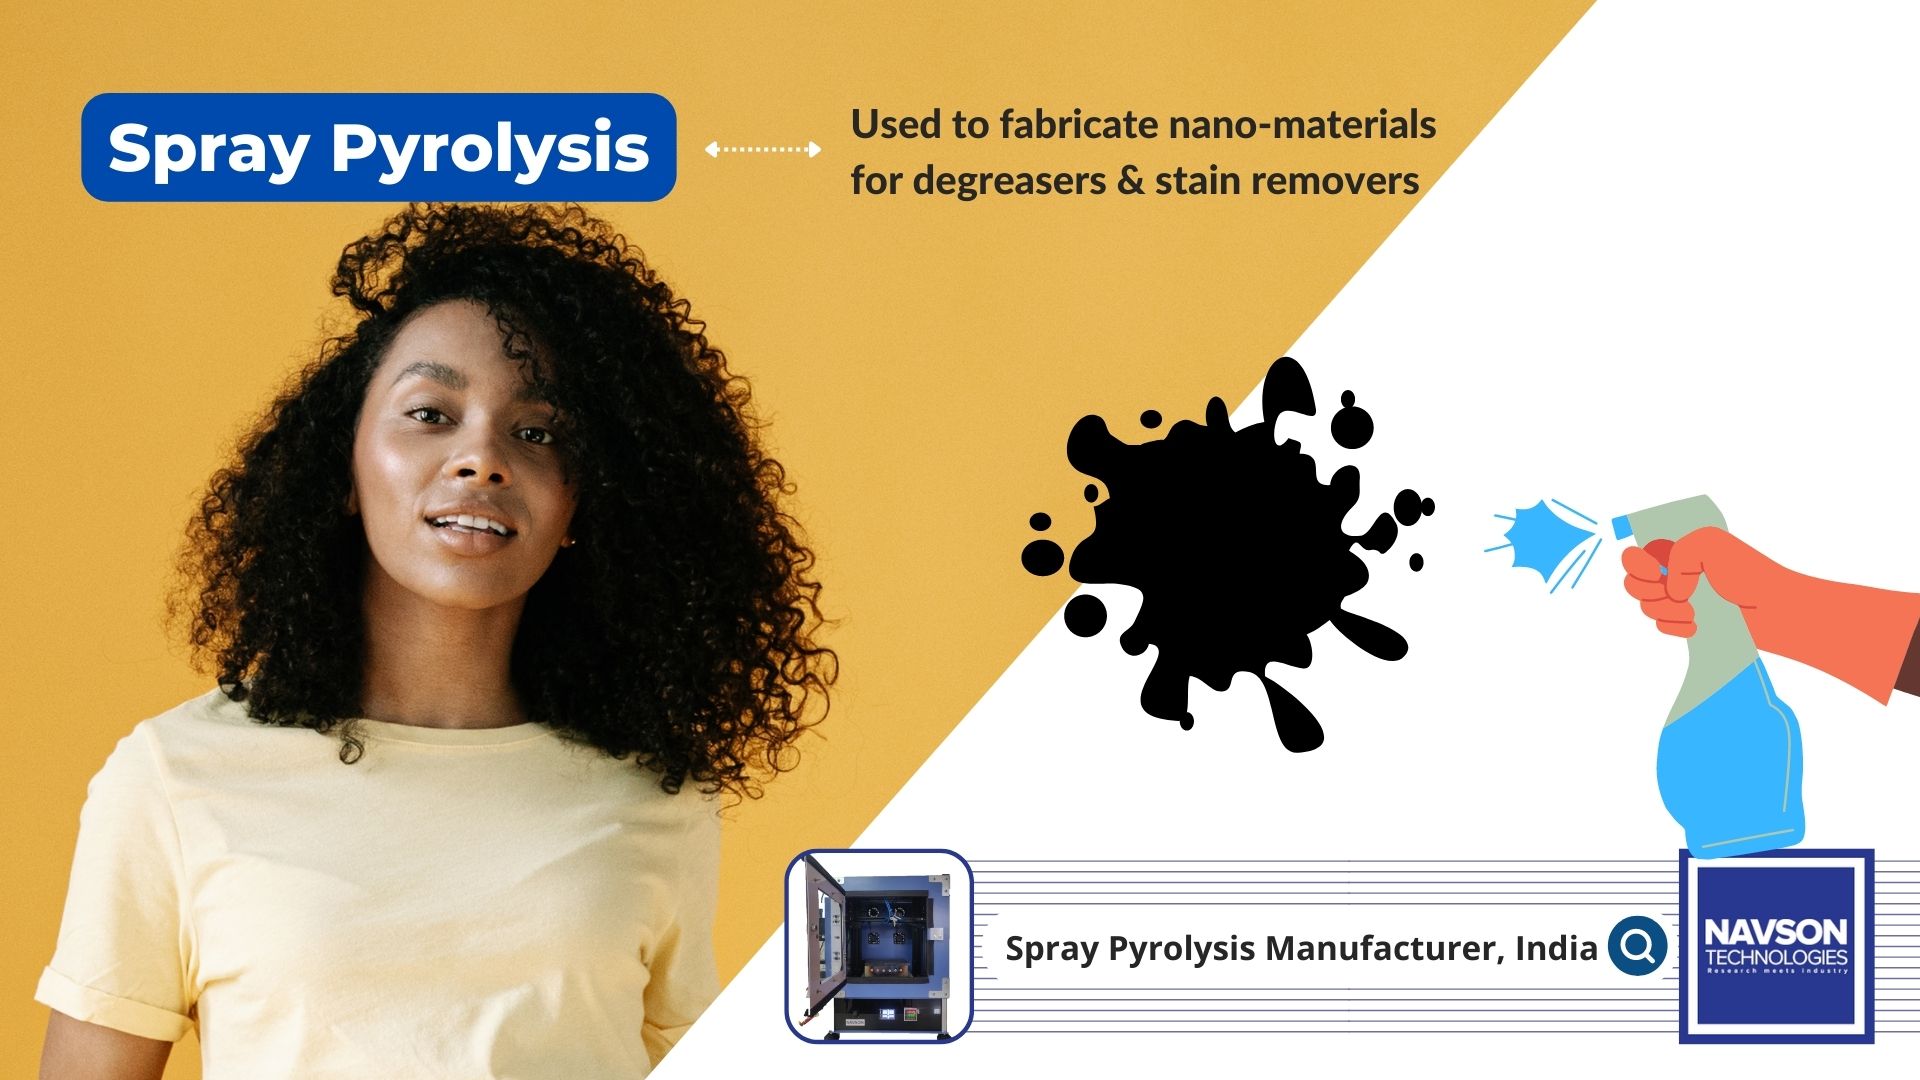 spray-pyrolysis-equipment-uses-in-nanotechnology